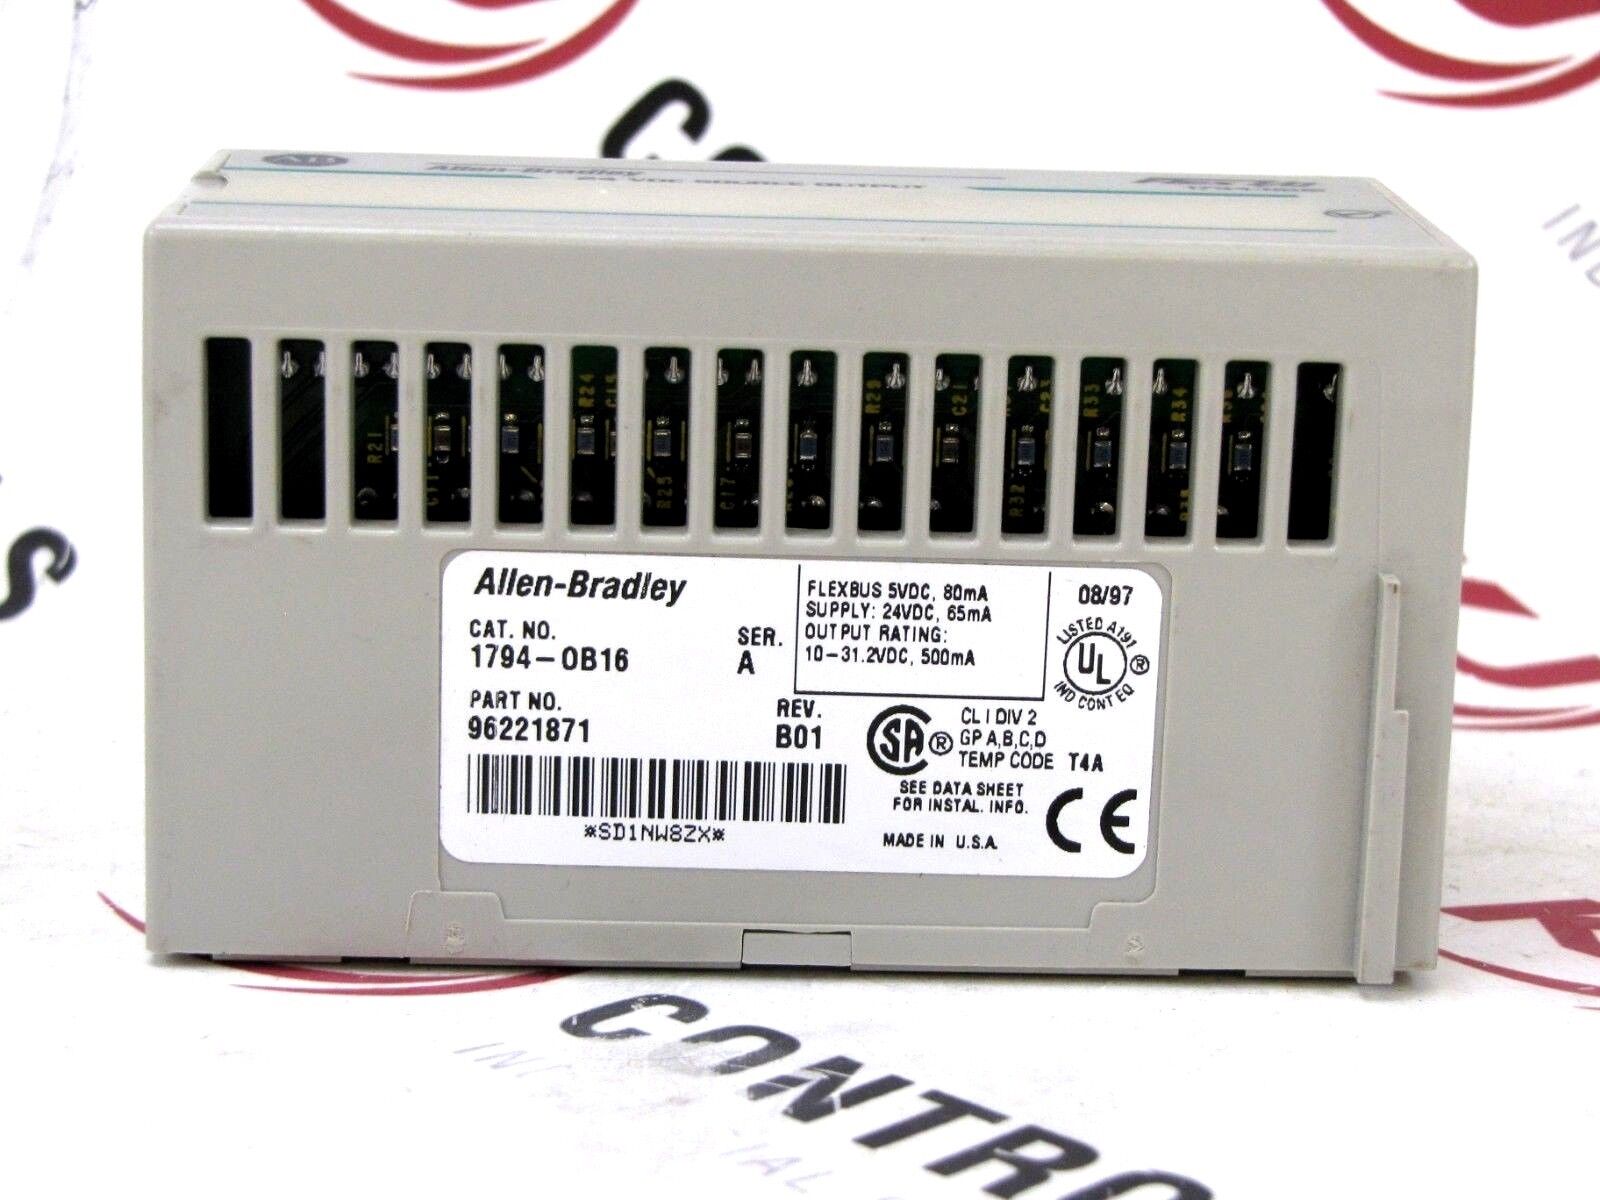 Allen-Bradley 1794-OB16 Flex I/O Sourcing Output Module 8A 24VDC